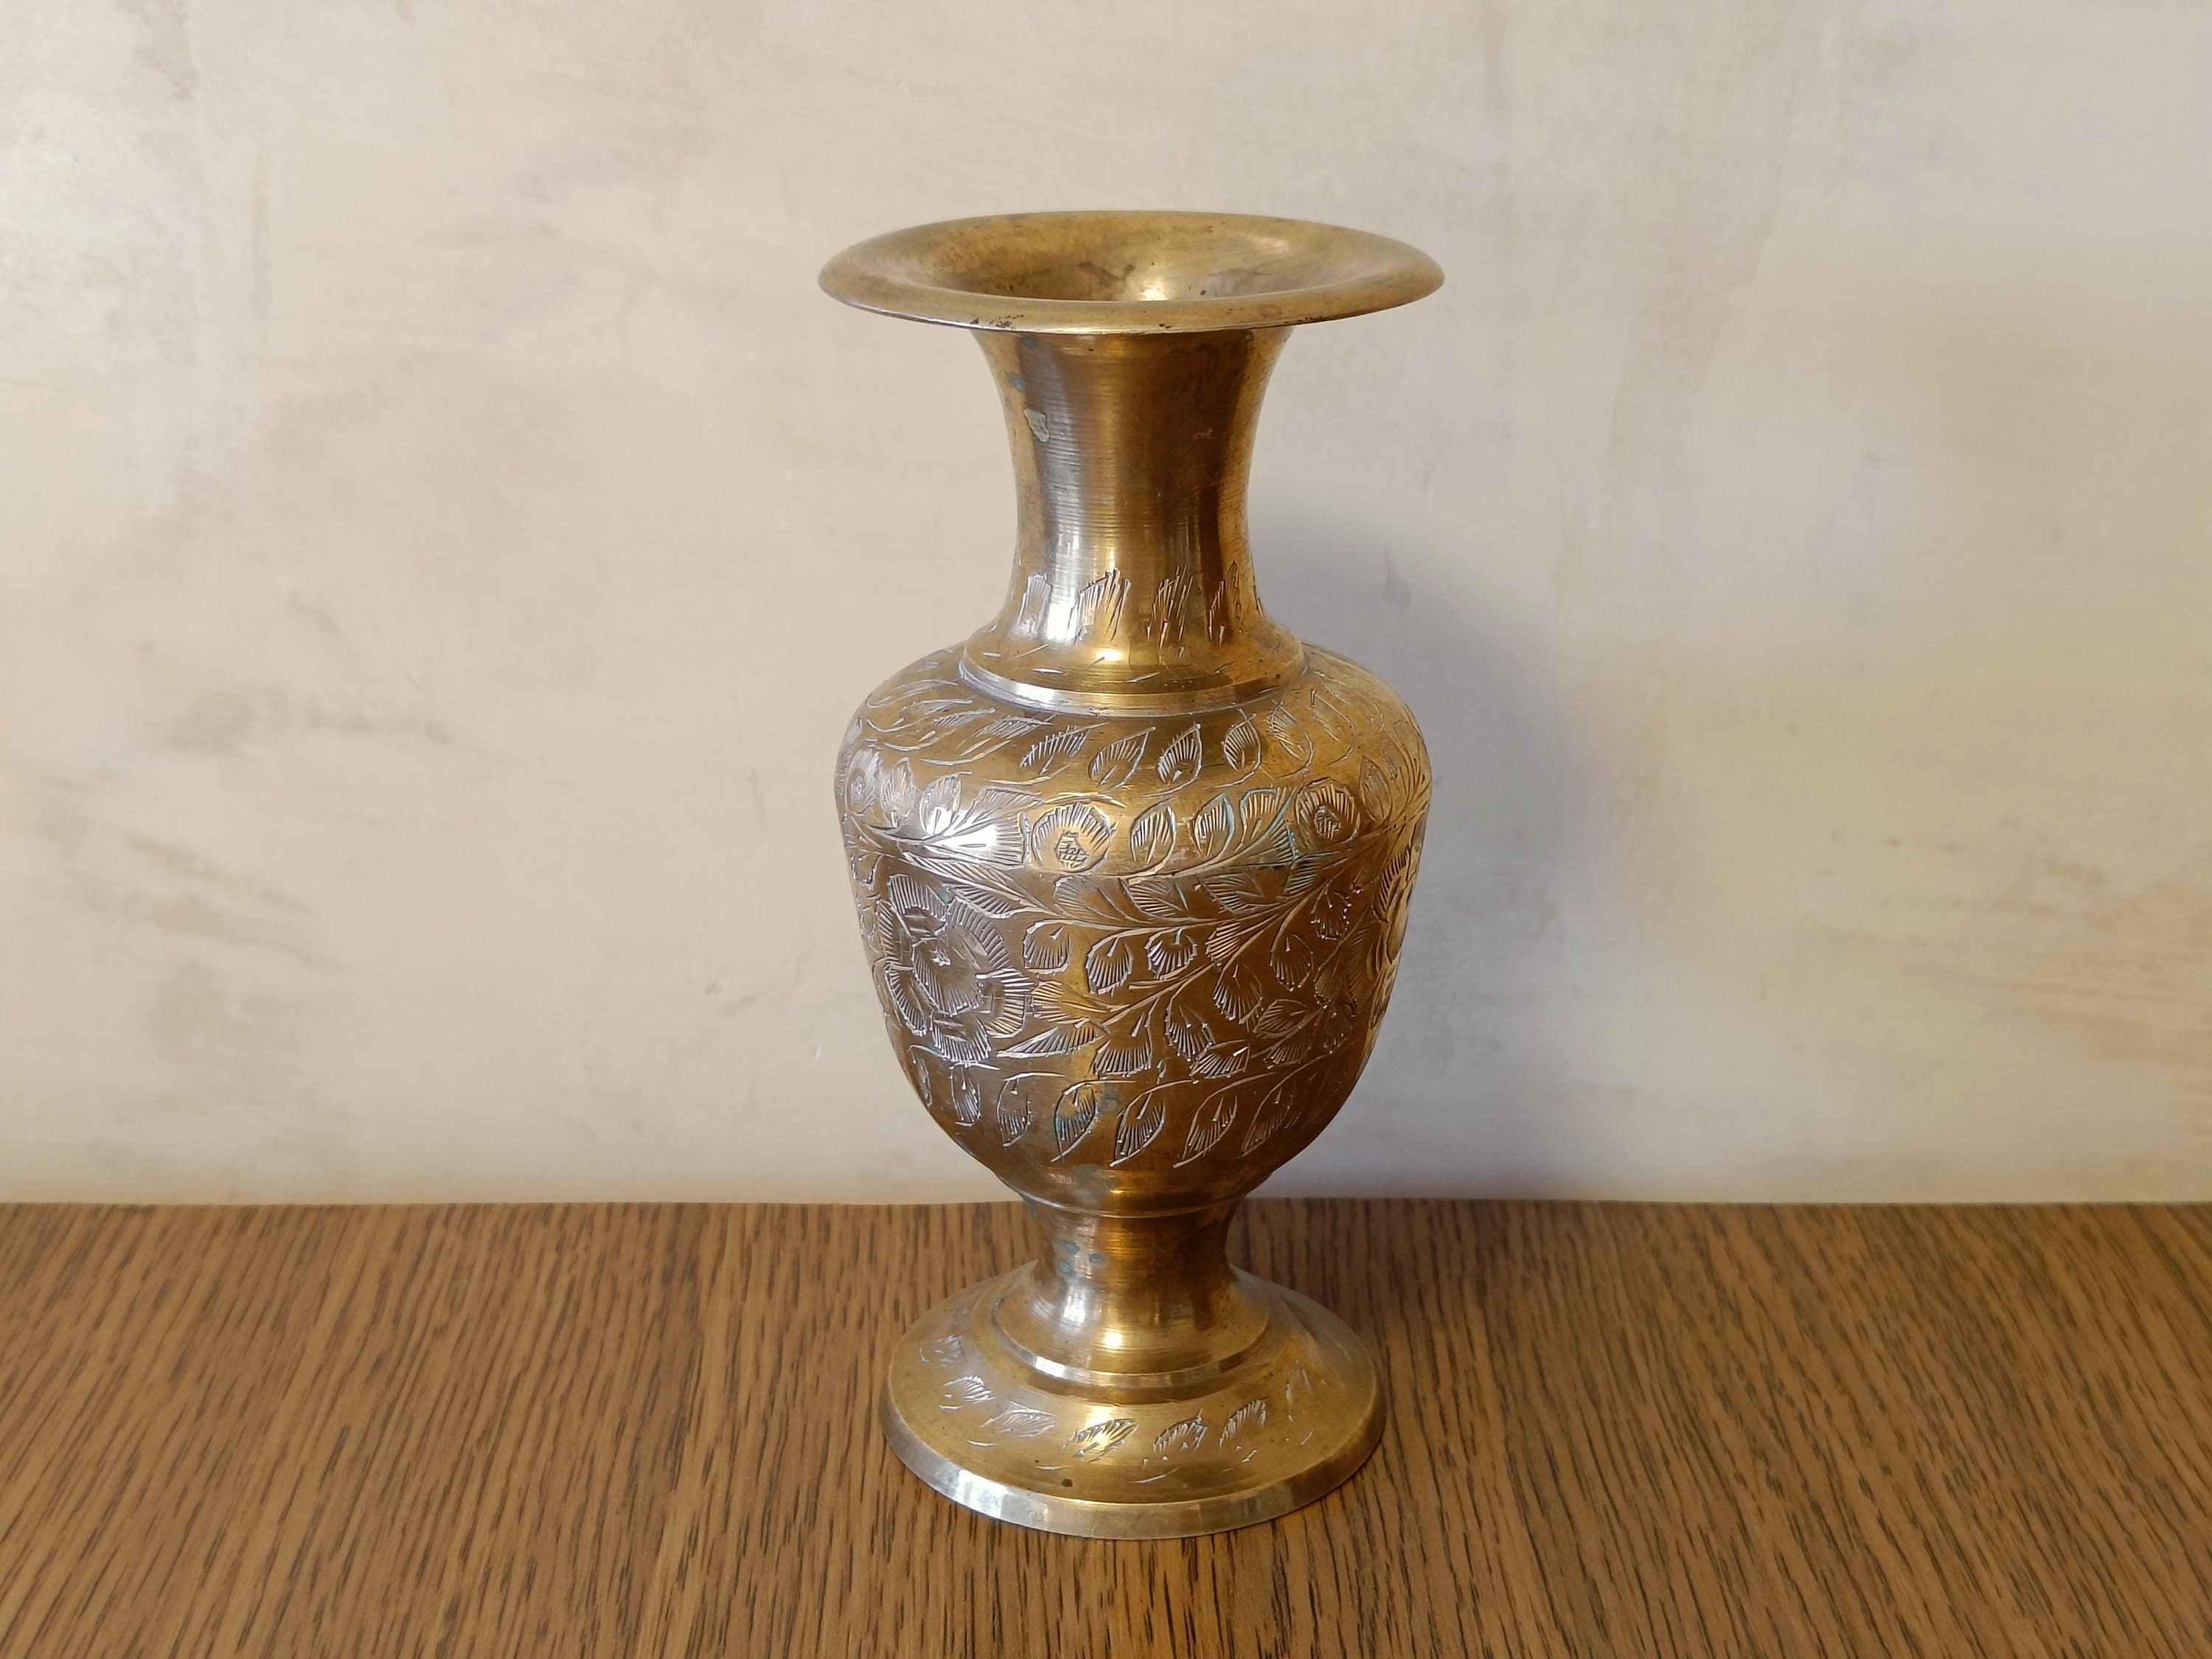 Vintage Brass Vase From India, Small Floral Vase, Engraved Vase